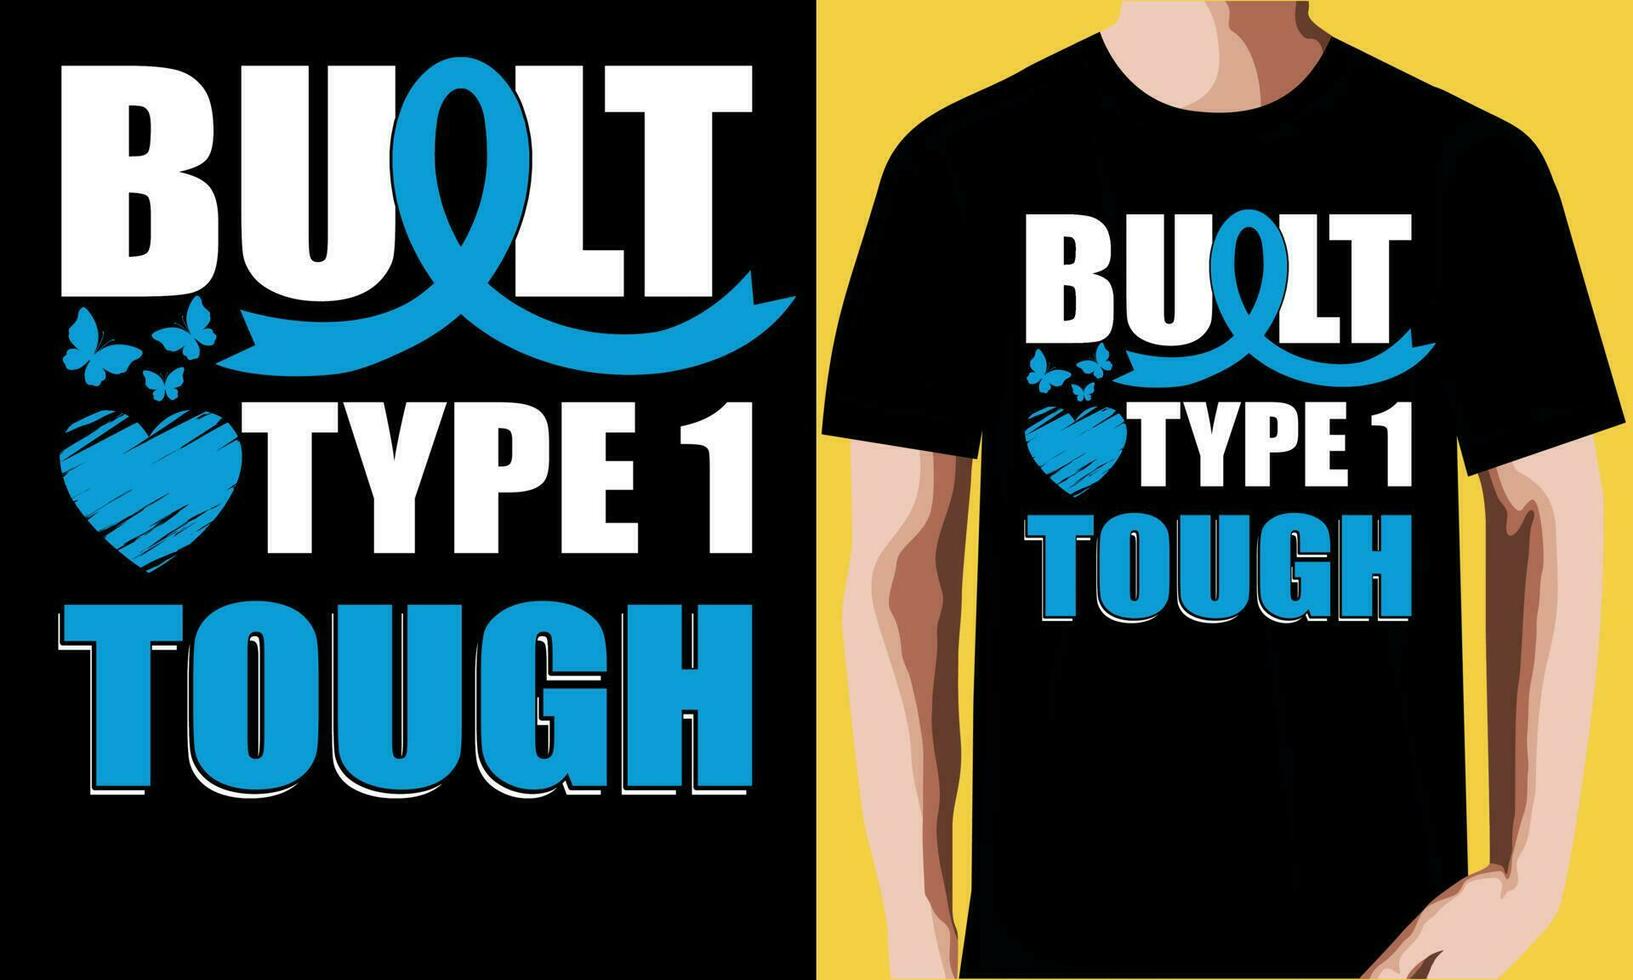 Built type 1 tough T-shirt Design. vector